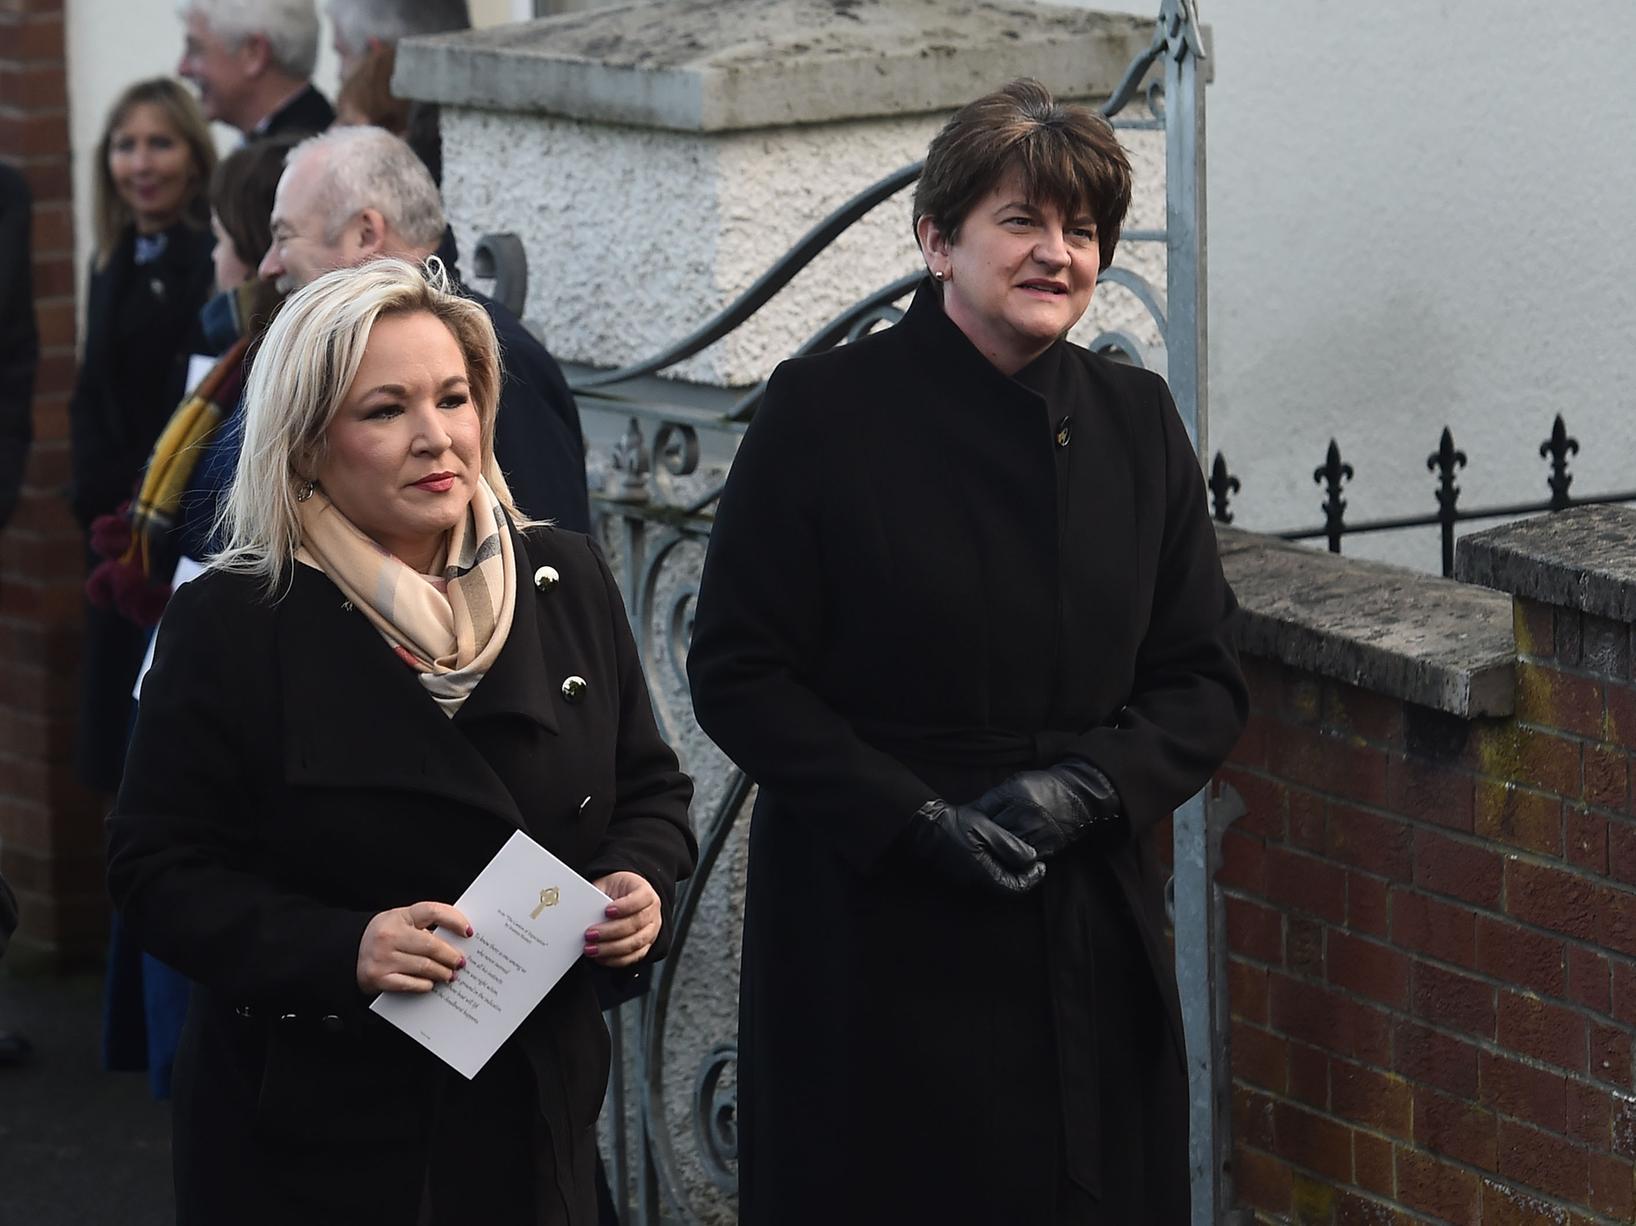 Deputy First Minister, Sinn Fein Vice President and Sinn Fein MLA for Mid Ulster, Michelle O'Neill with First Minister, DUP leader and DUP MLA for Fermanagh and South Tyrone, Arlene Foster.